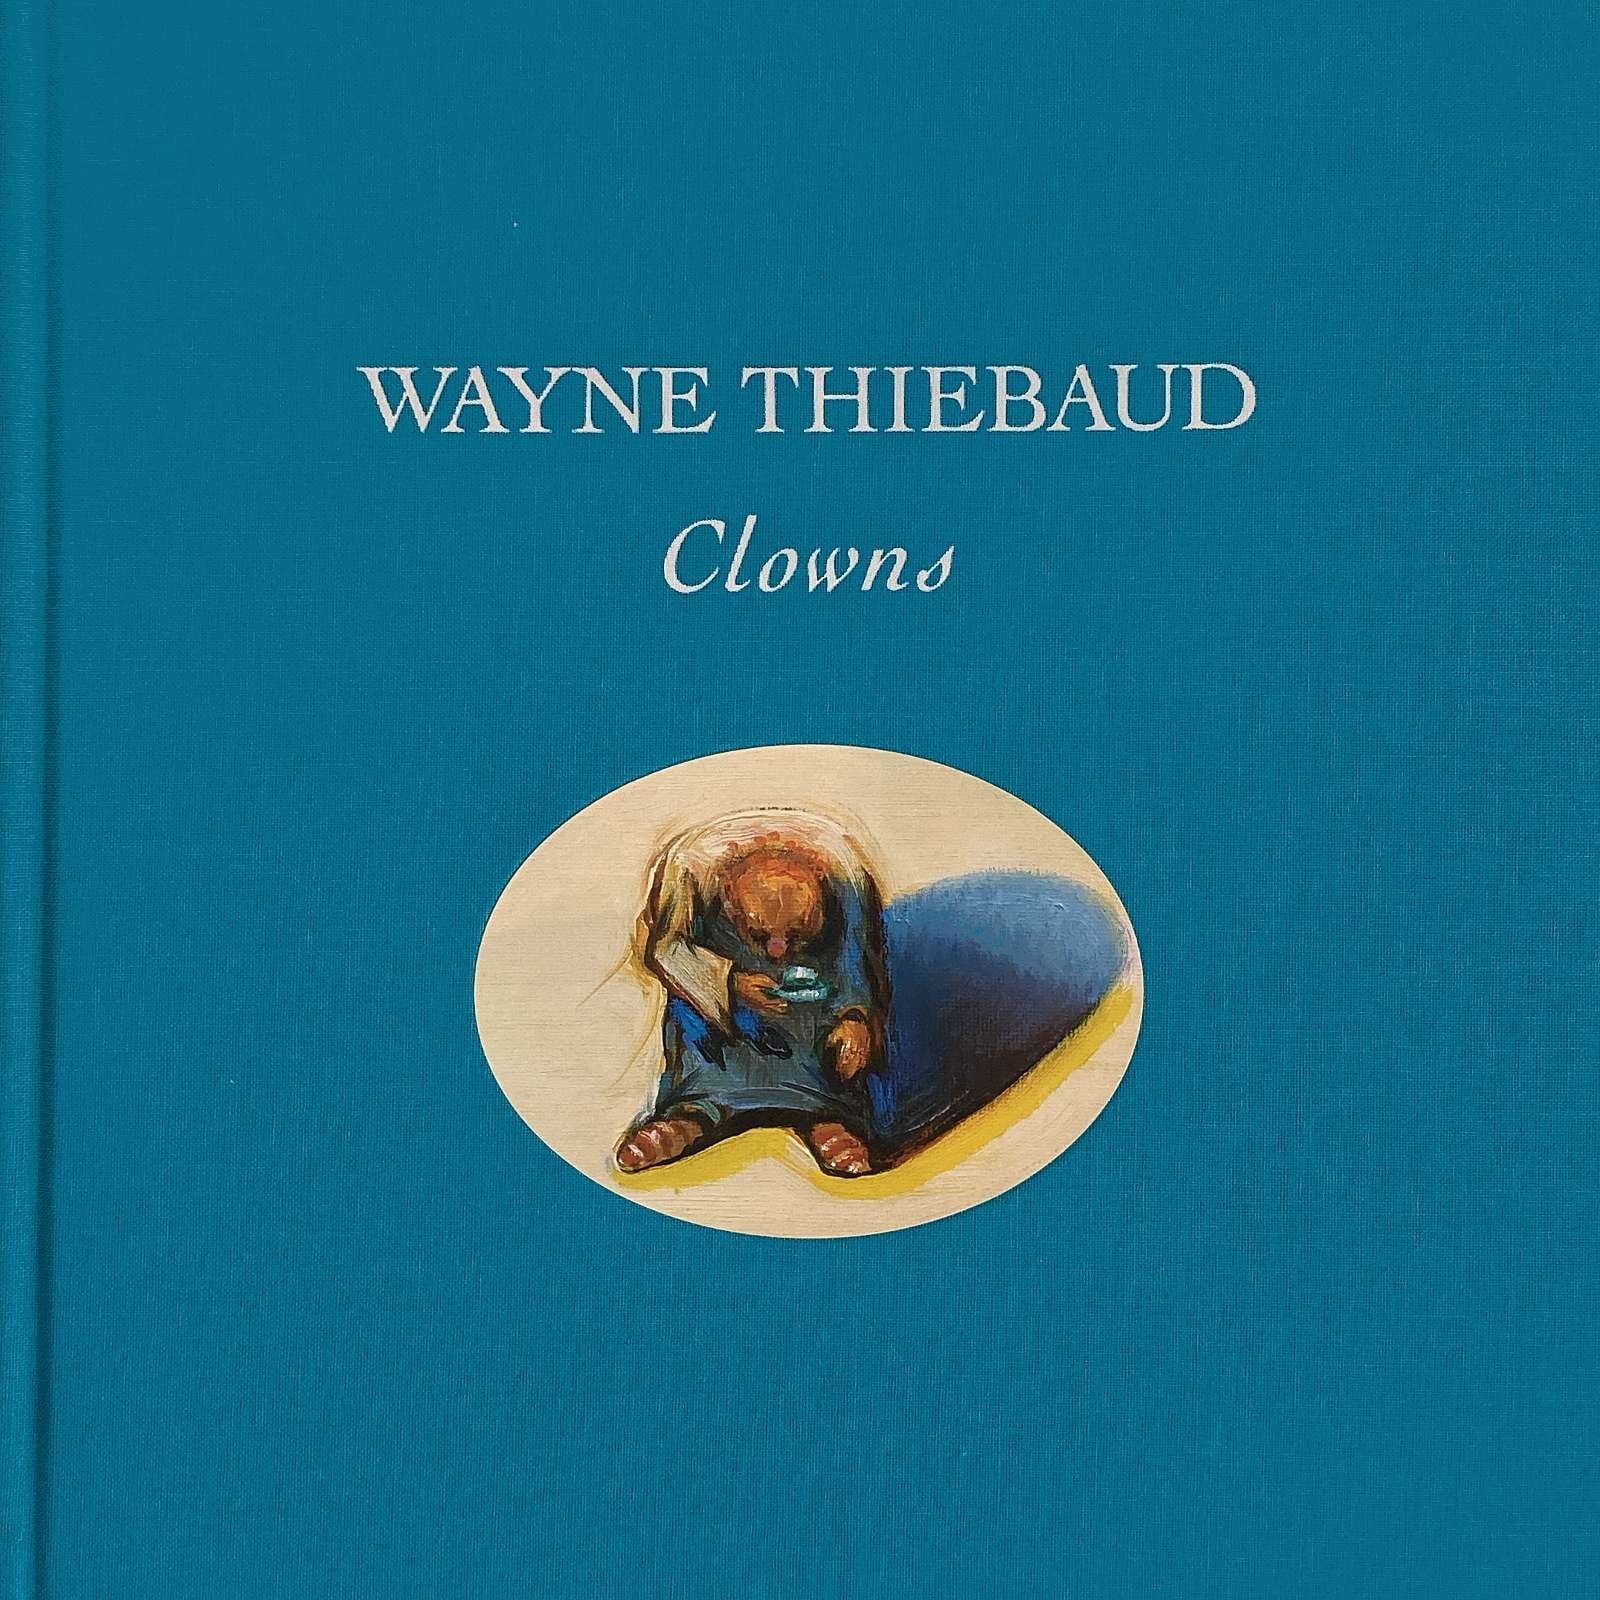 Wayne Thiebaud: Clowns - December 7, 2019 - March 28, 2020 - Publications - Paul Thiebaud Gallery